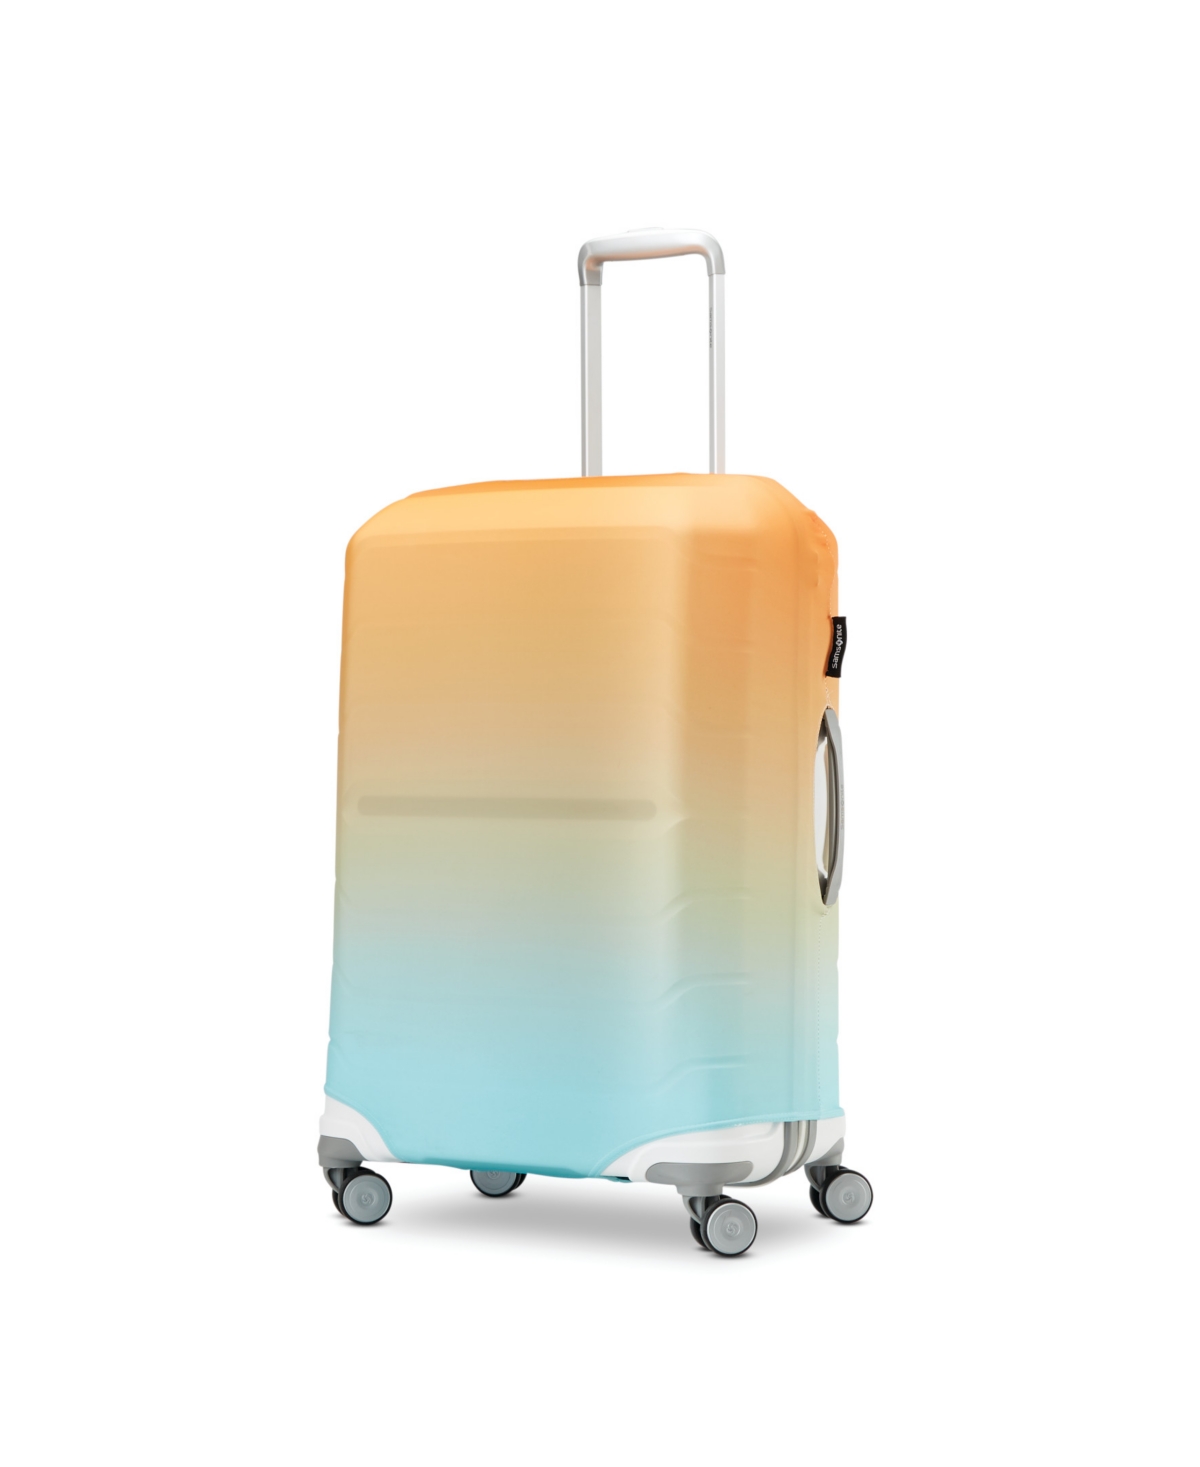 Printed Luggage Color M - Blue, Orange Ombre